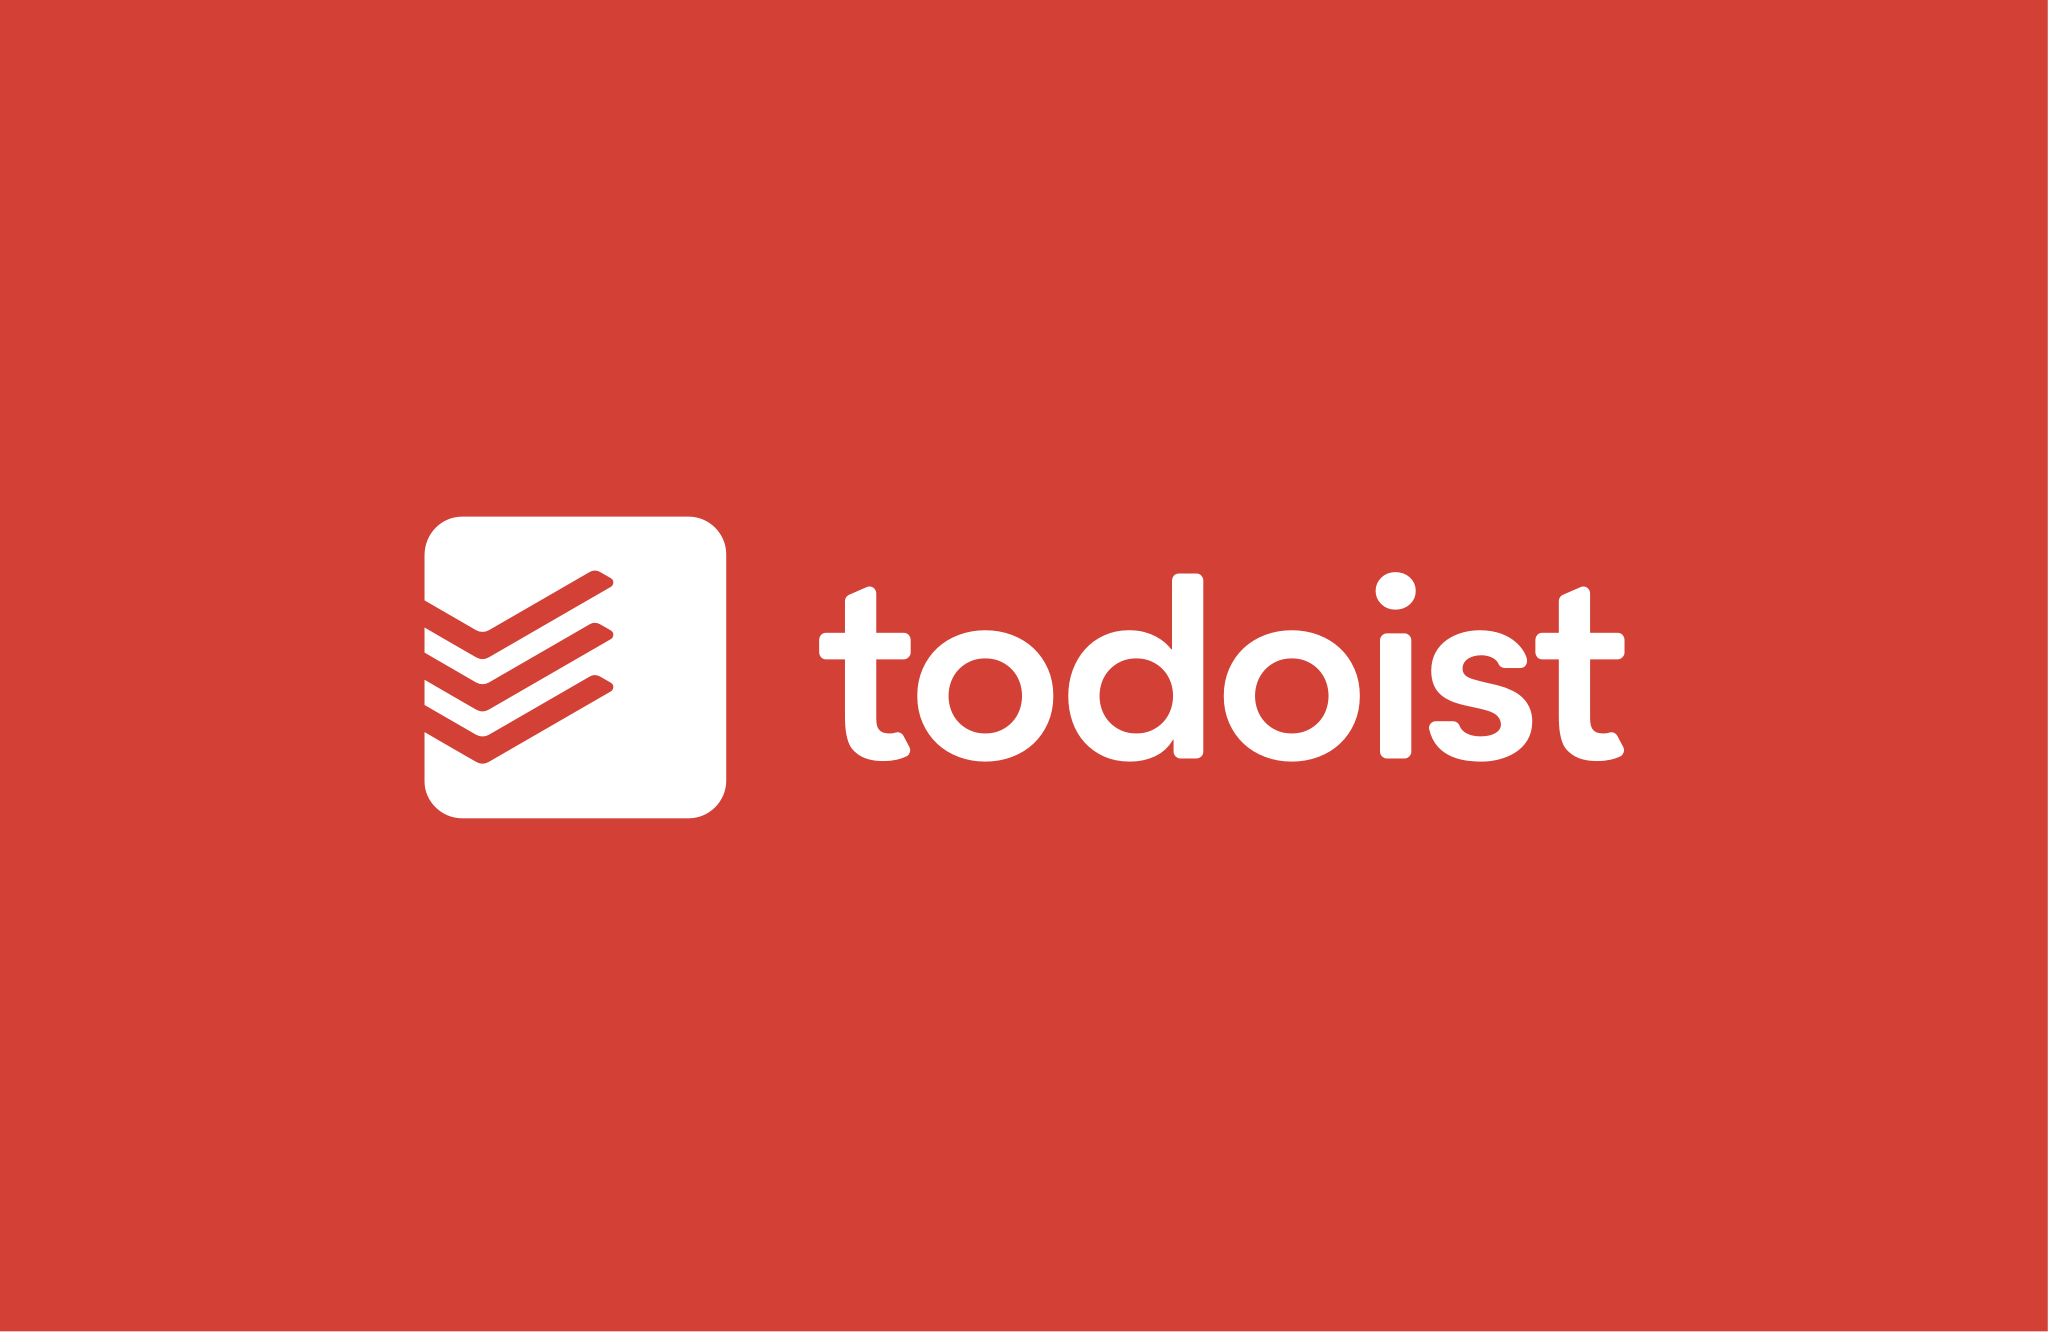 Todoist new red logo